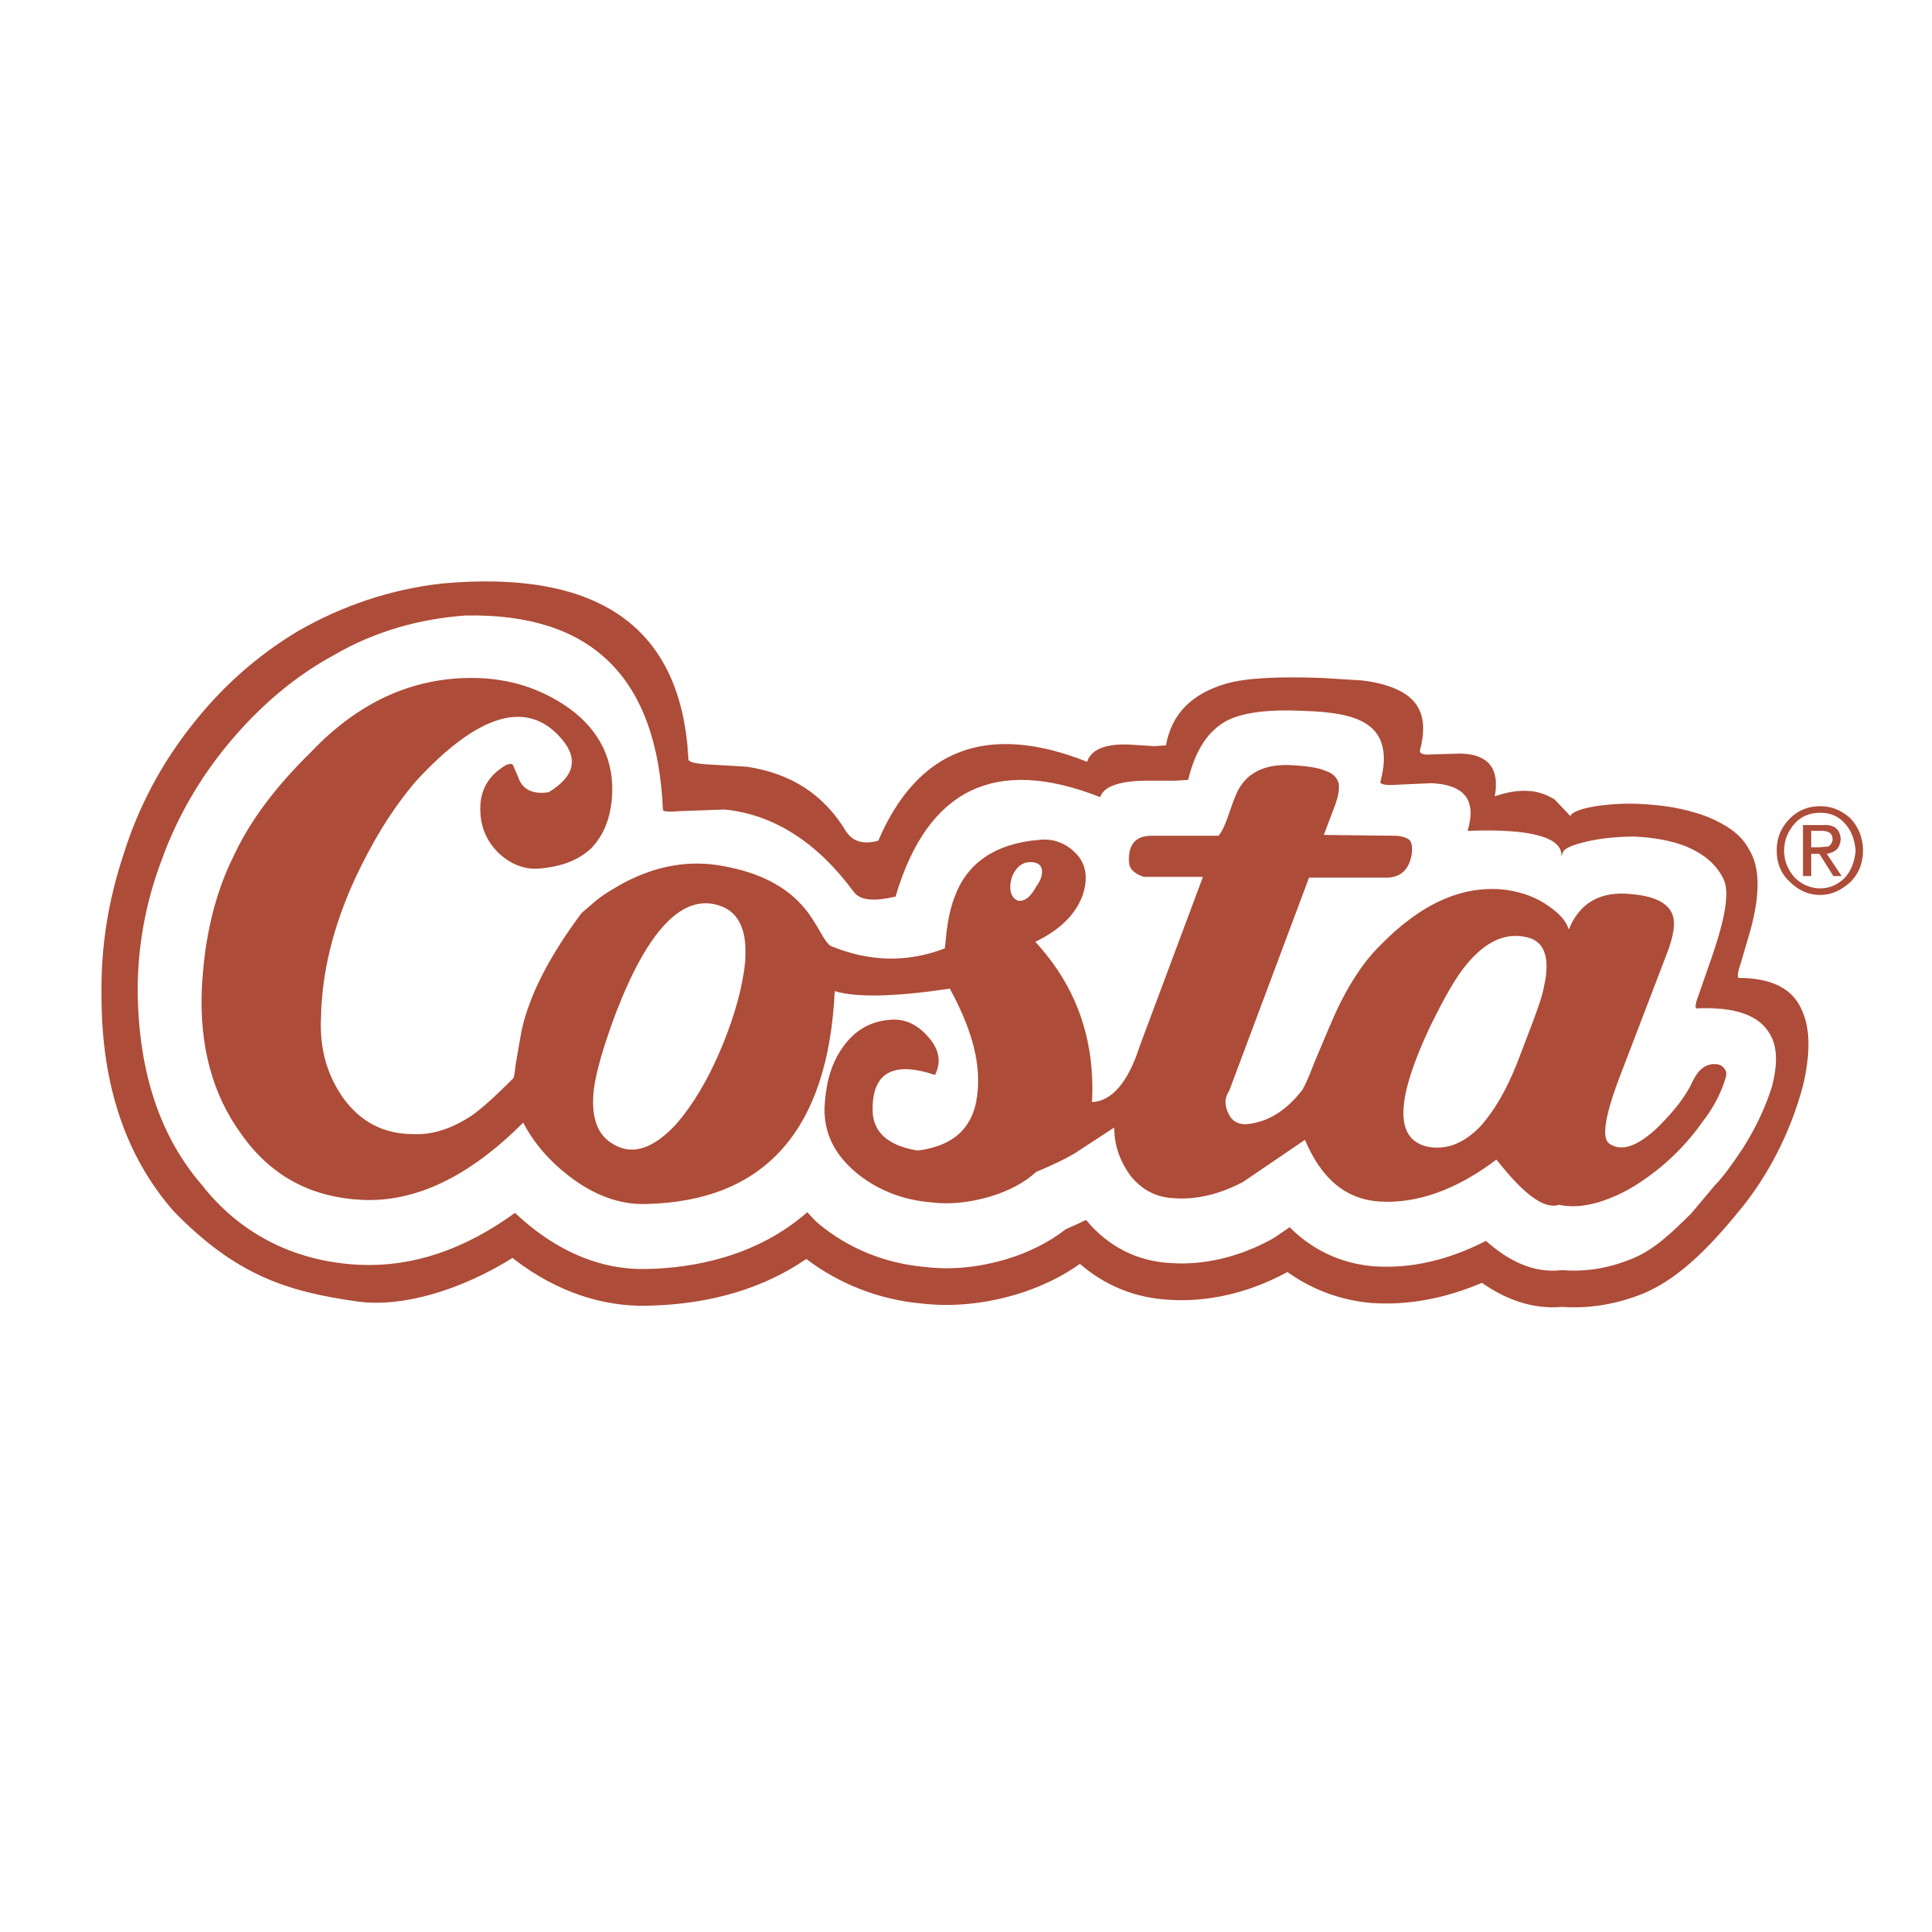 Costa Logo - Costa Logo PNG Transparent & SVG Vector - Freebie Supply